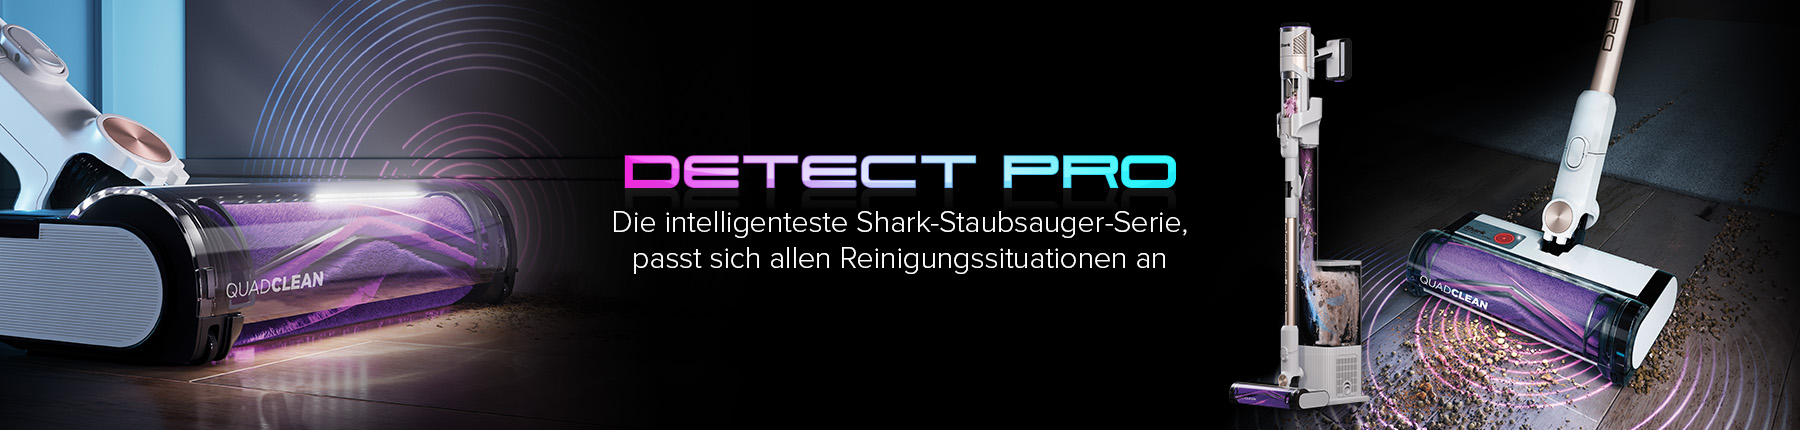 Shark Detect Pro Akku-Staubsauger - Die intelligenteste Shark-Staubsauger-Serie, passt sich allen Reinigungssituationen an